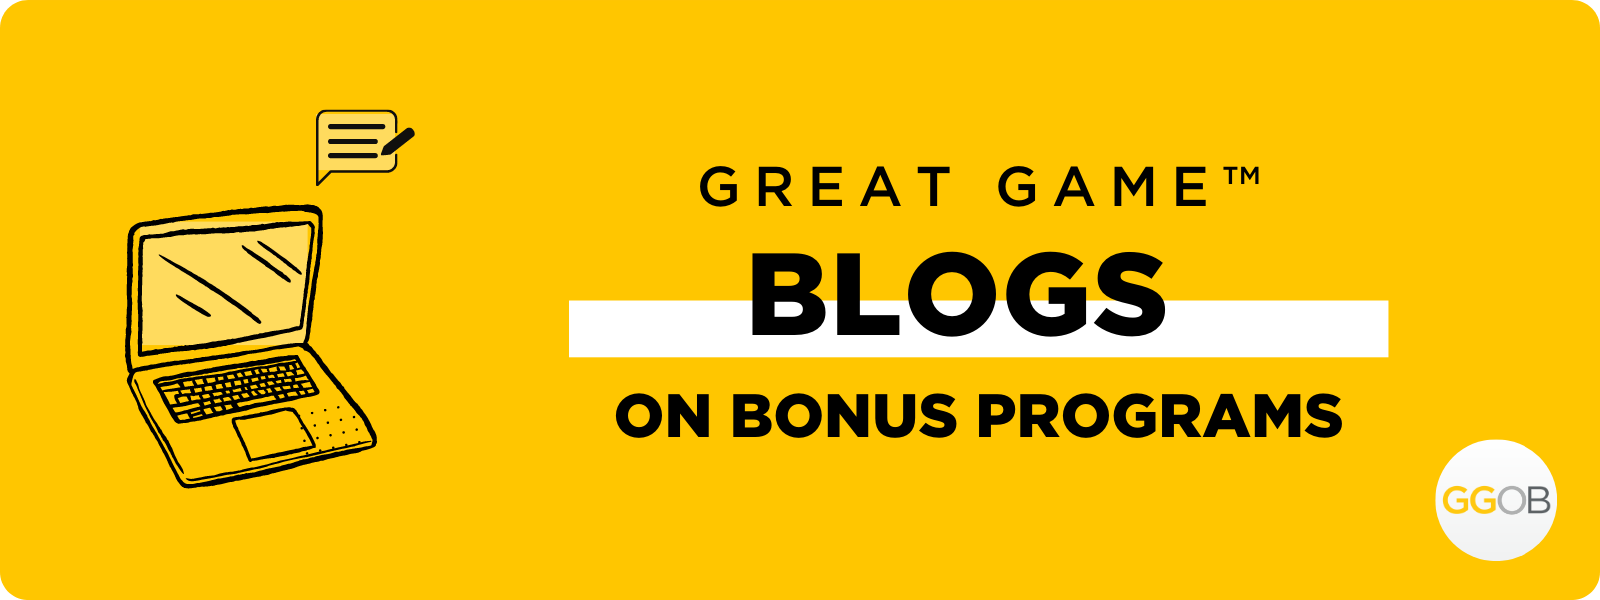 Great Game™ Blogs On Bonus Programs